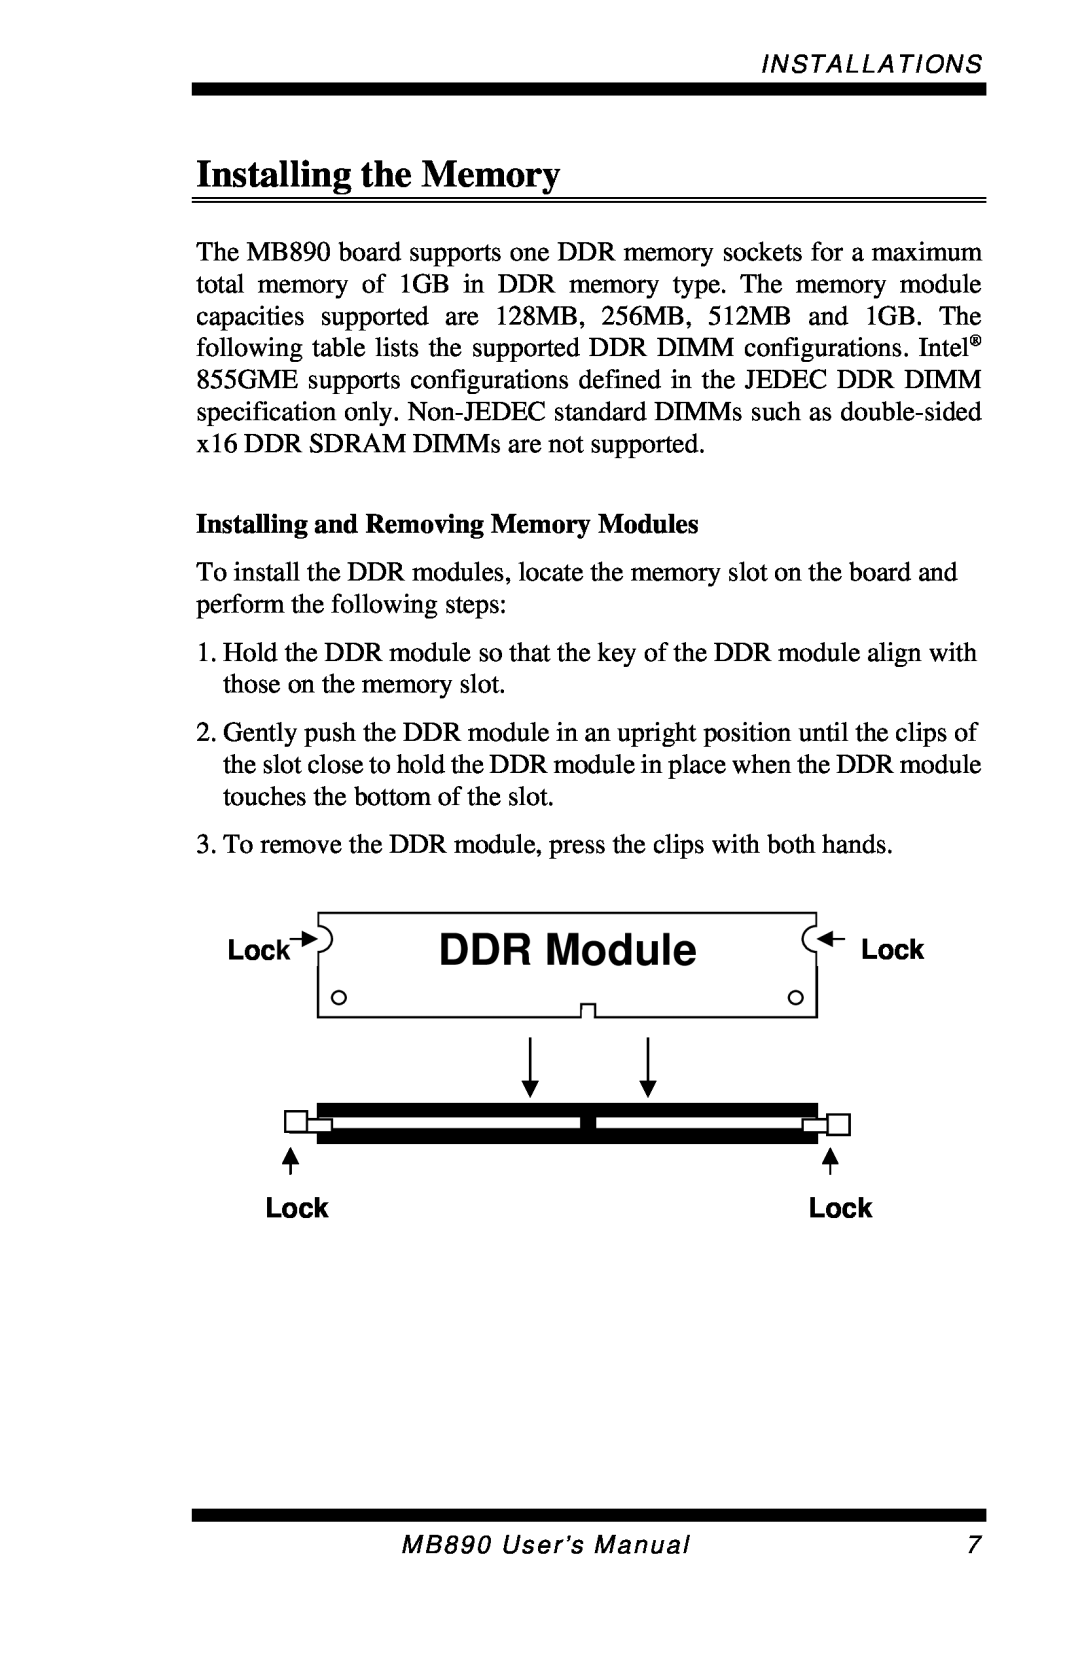 Intel MB890 user manual DDR Module, Installing the Memory, Lock 